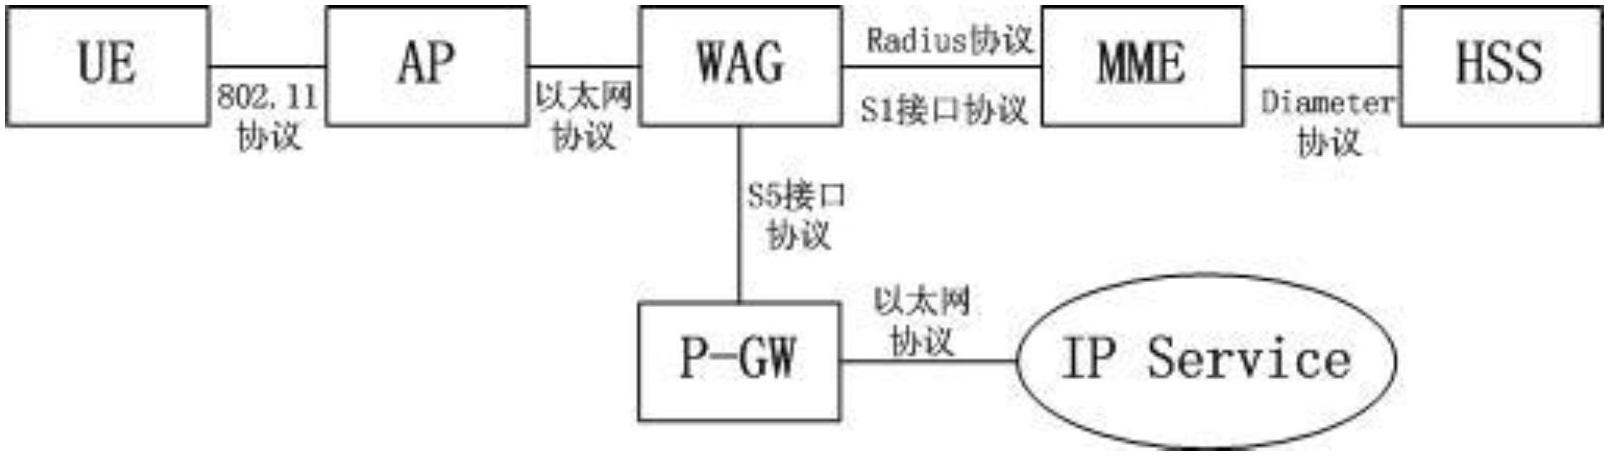 EPS-WLAN fusion system and switching method based on framework